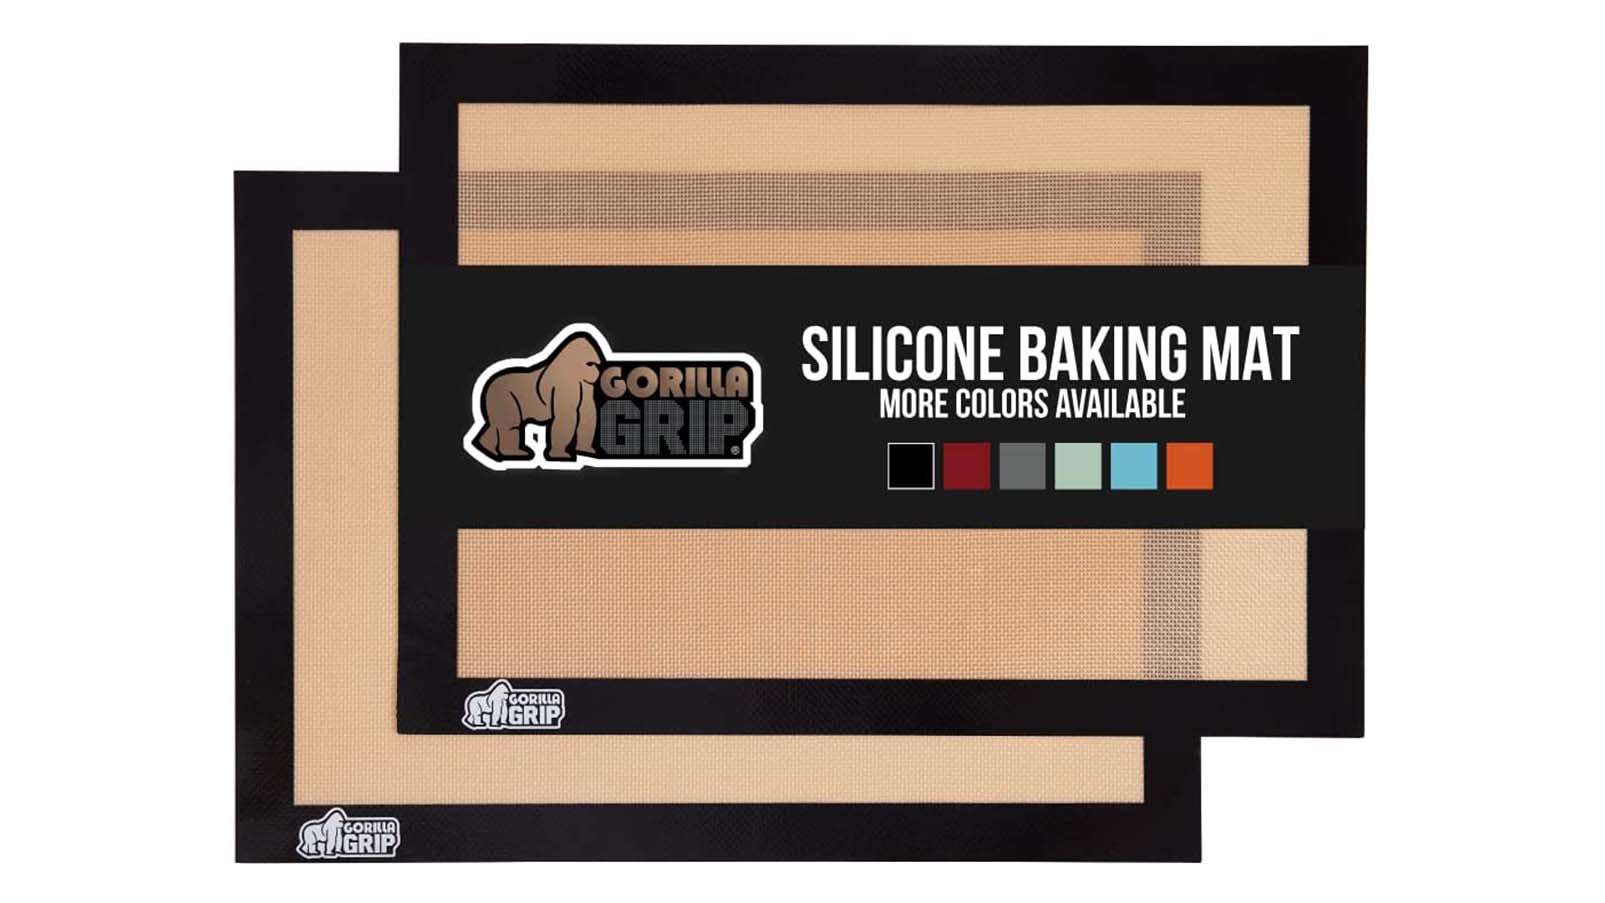 https://media.cnn.com/api/v1/images/stellar/prod/220603111531-best-silicone-baking-mats-gorilla-grip.jpg?c=original